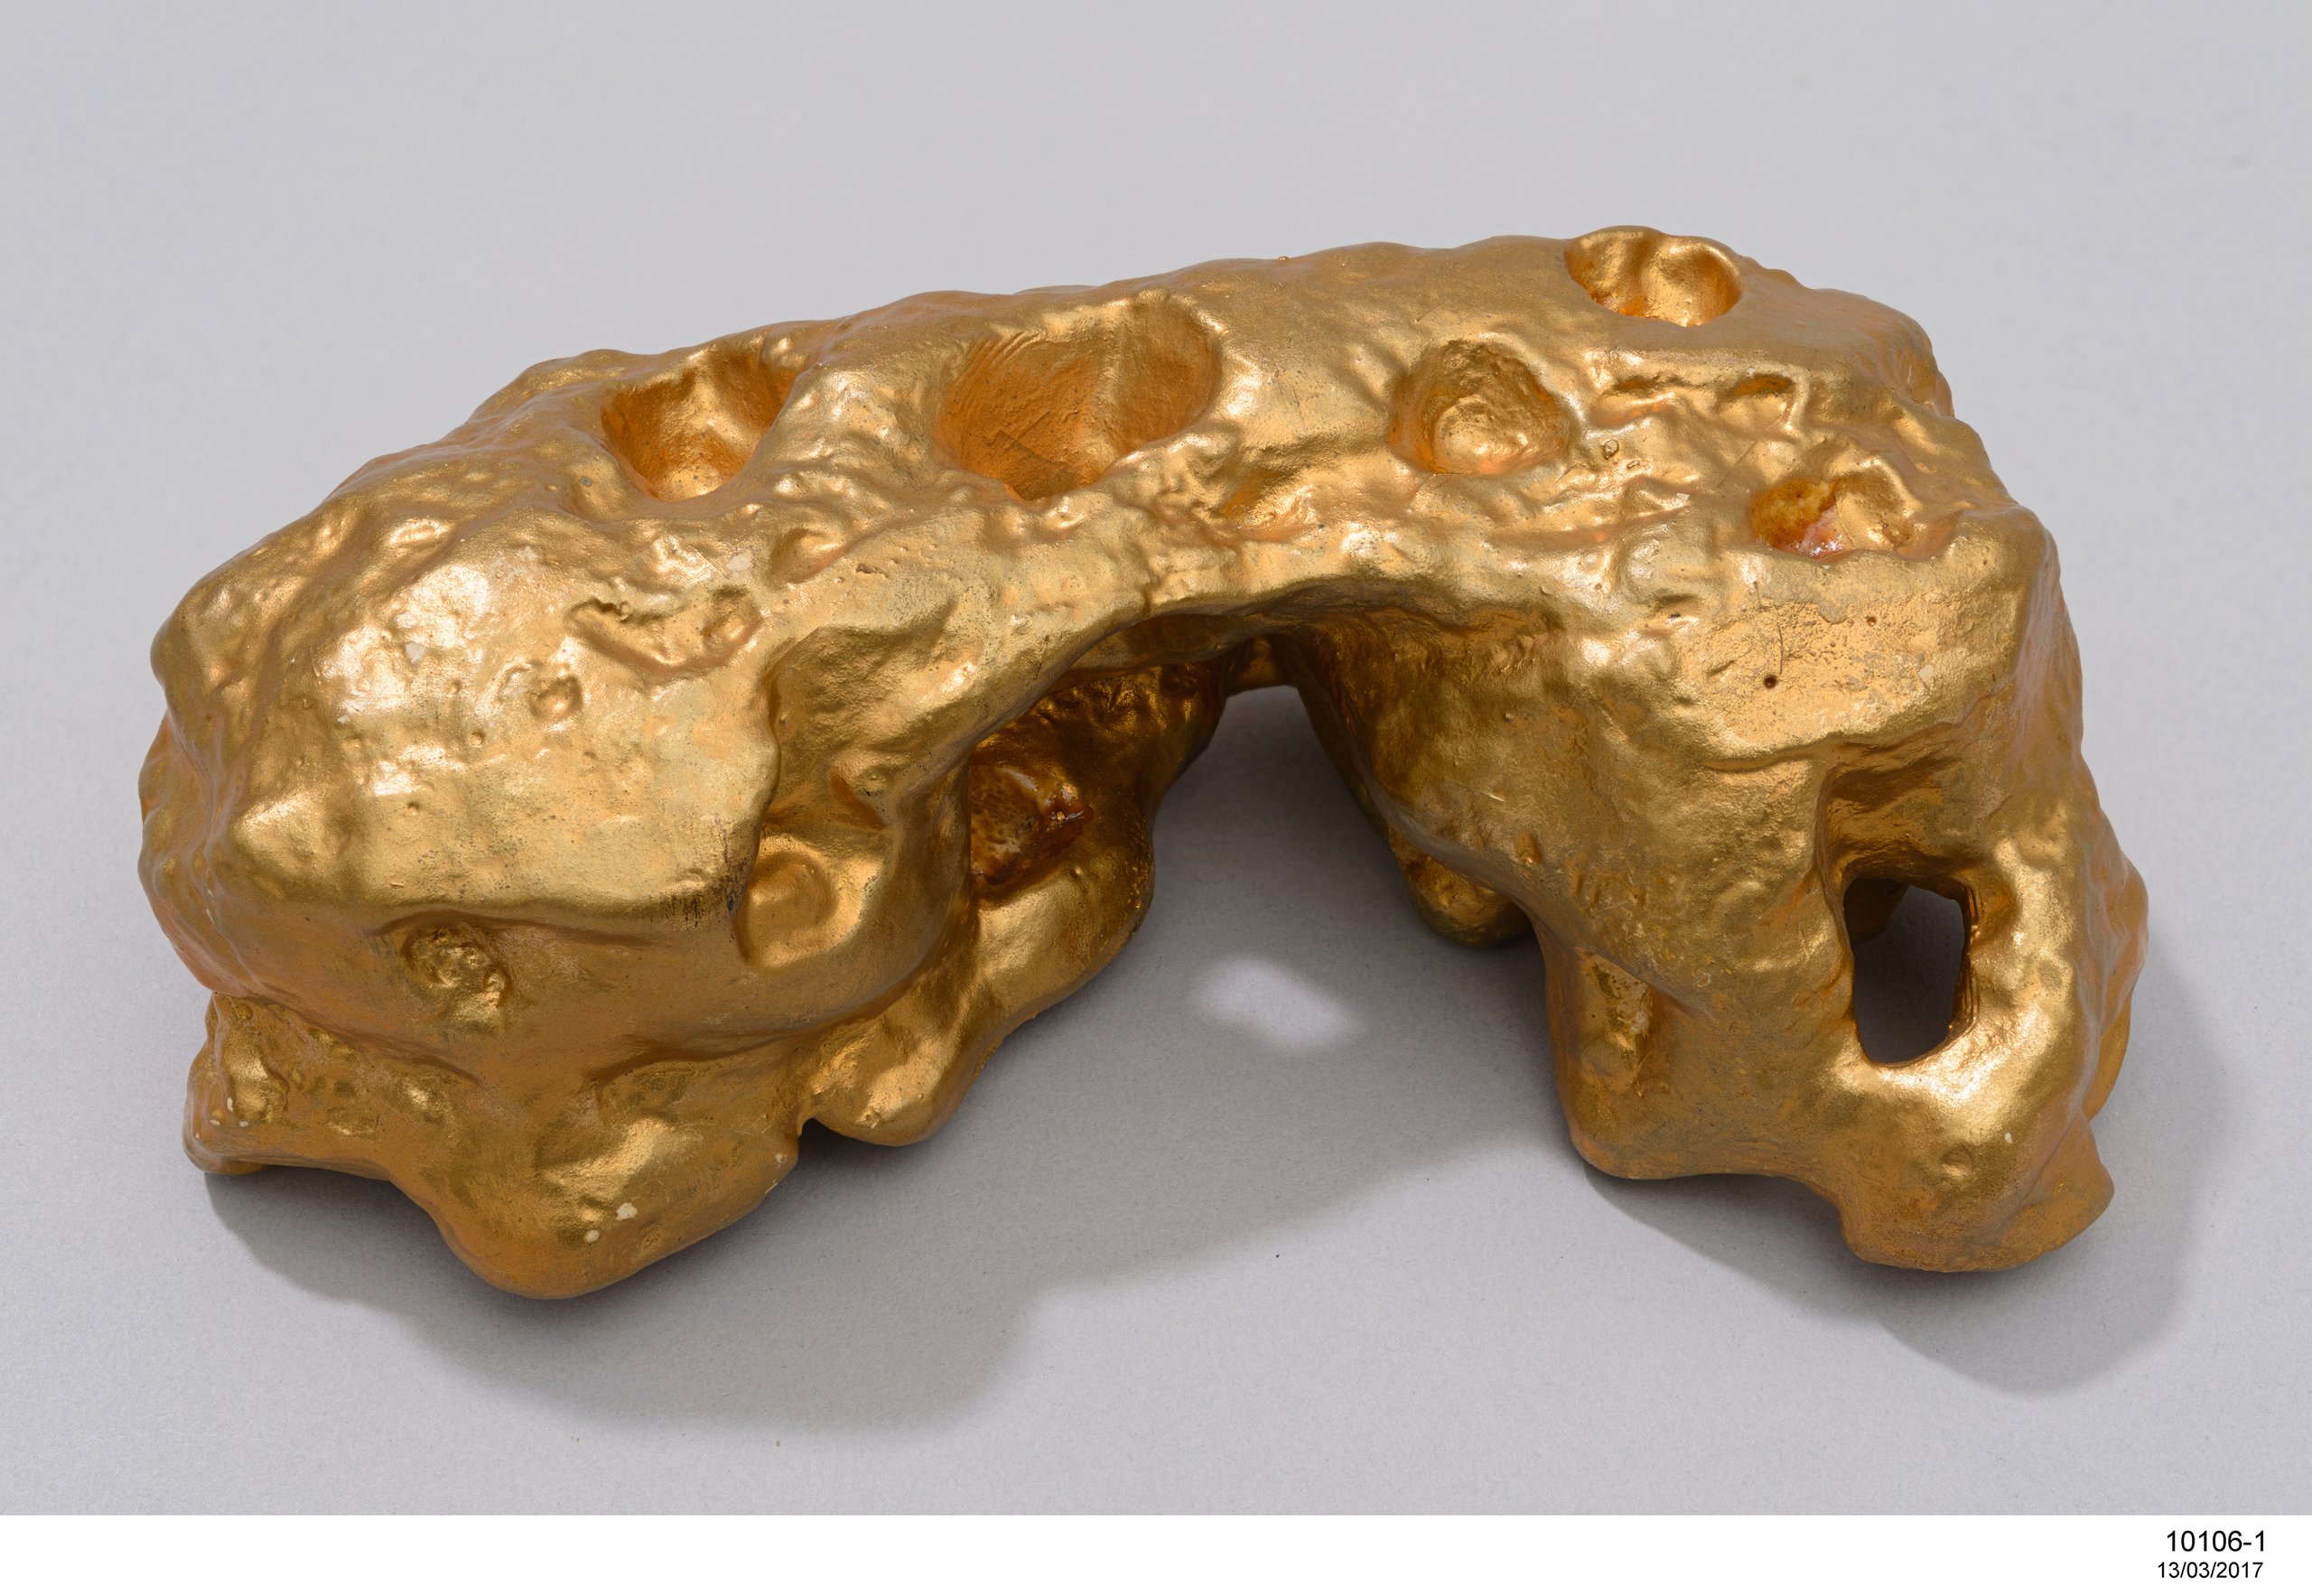 Model of gold nugget found in Berlin, Victoria